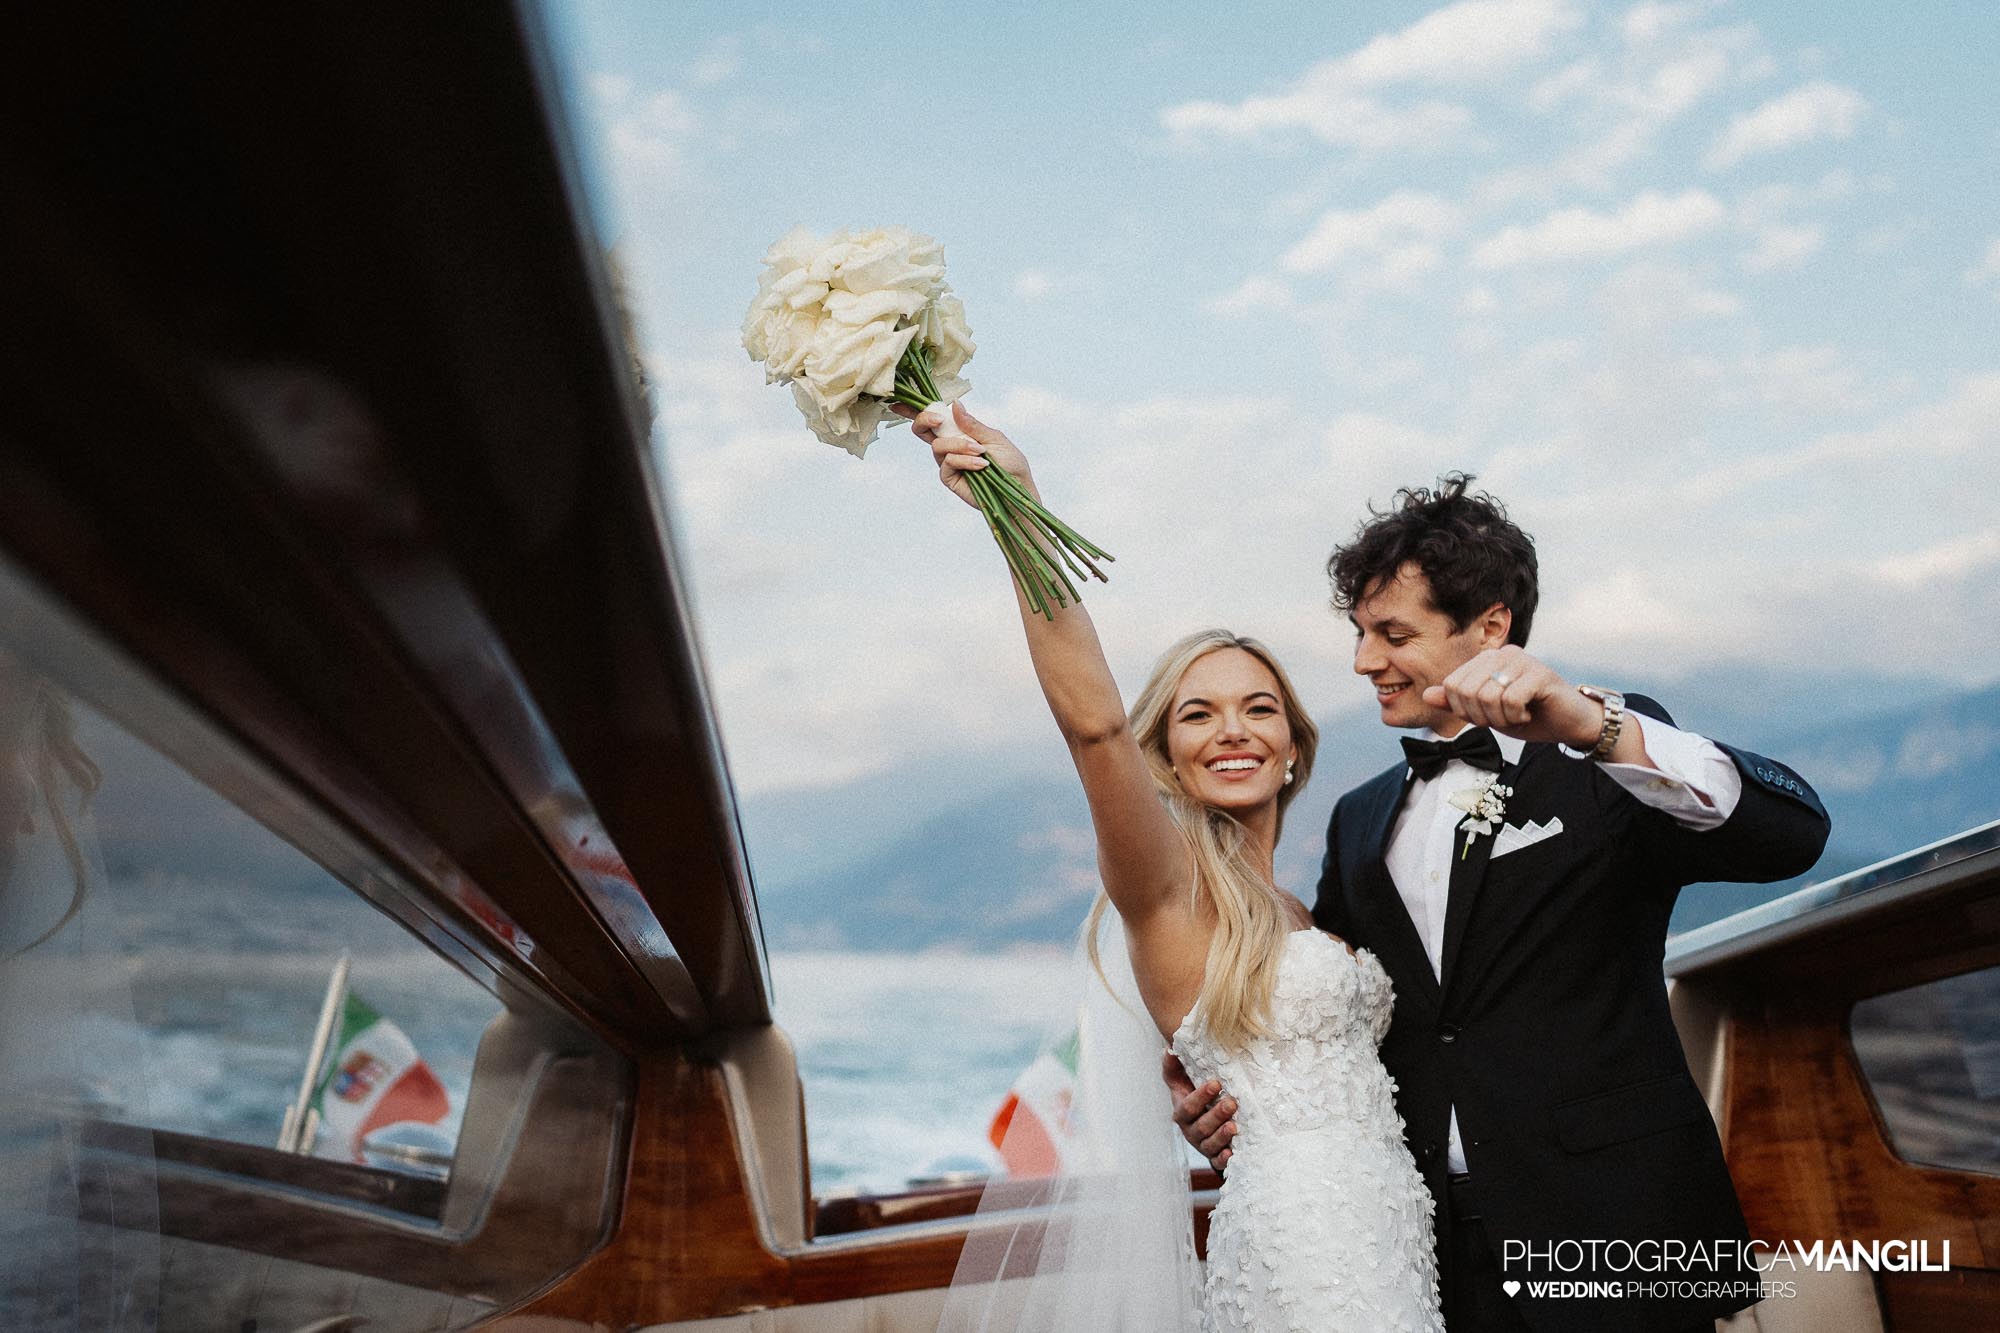 wedding photo villa serbelloni bellagio como lake london dylan 100